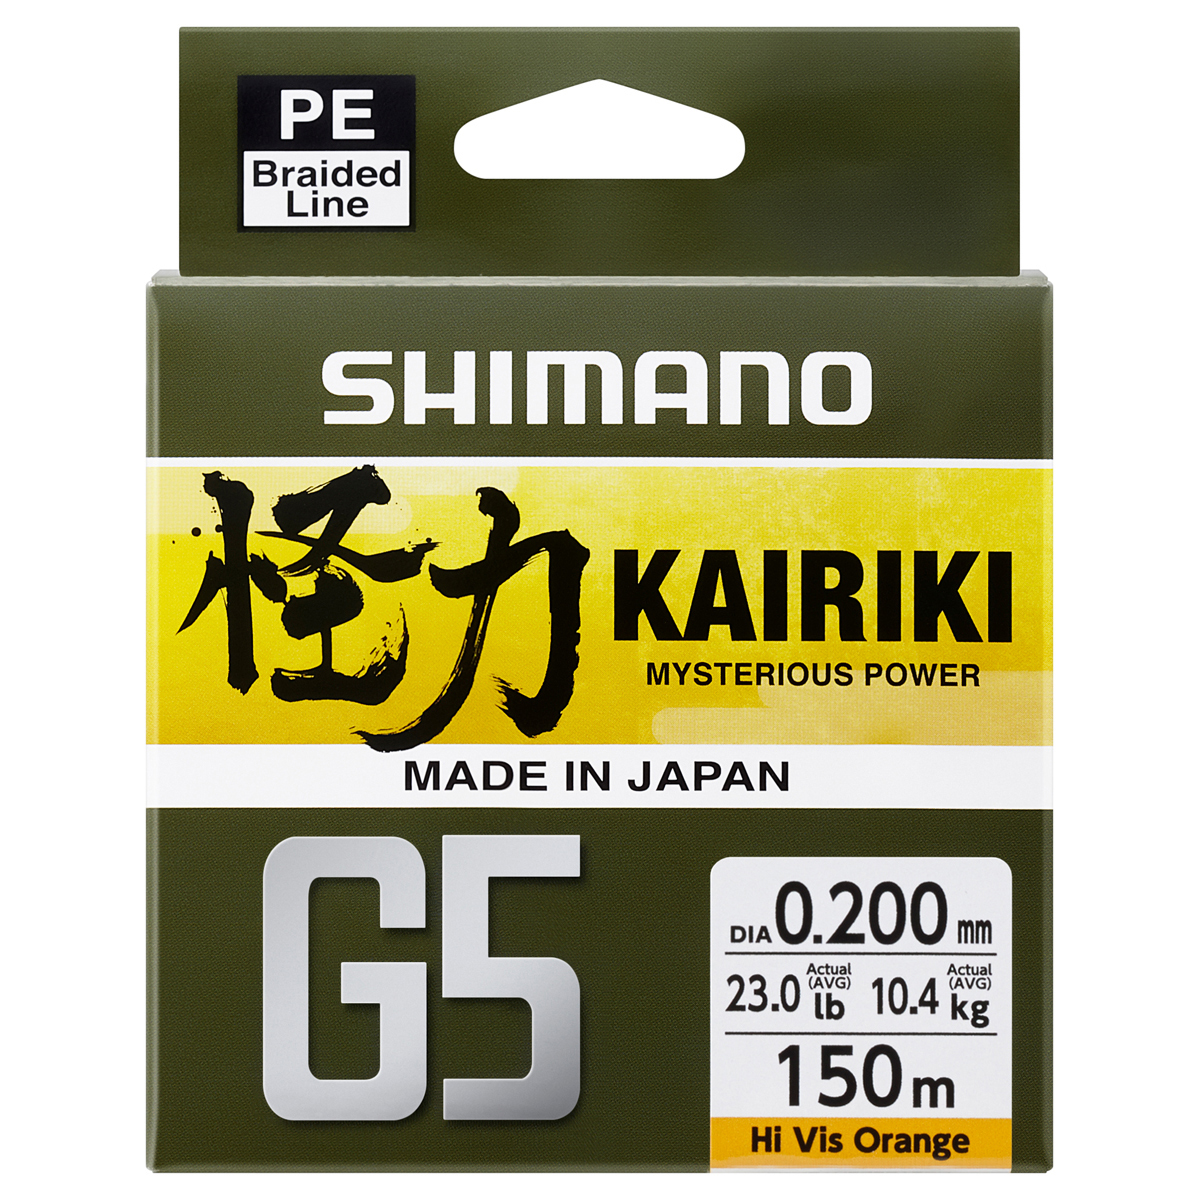 Shimano Kairiki G5 Steel Gray 150 m